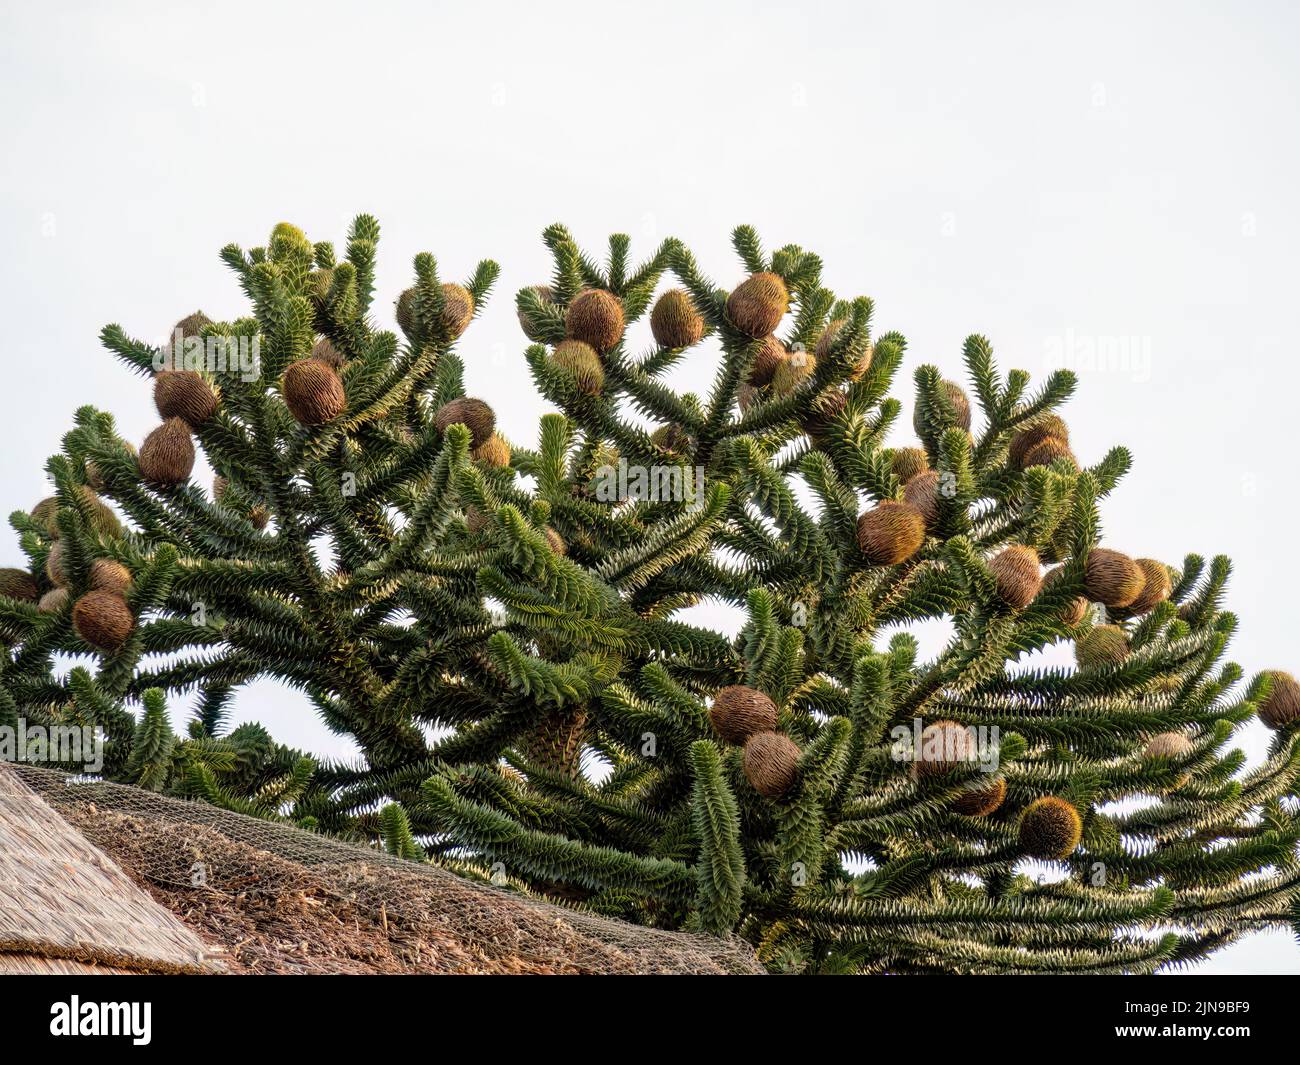 The Female Fruit of the Monkey Puzzle Tree, Araucaria araucana, in Devon, England, UK. Stock Photo